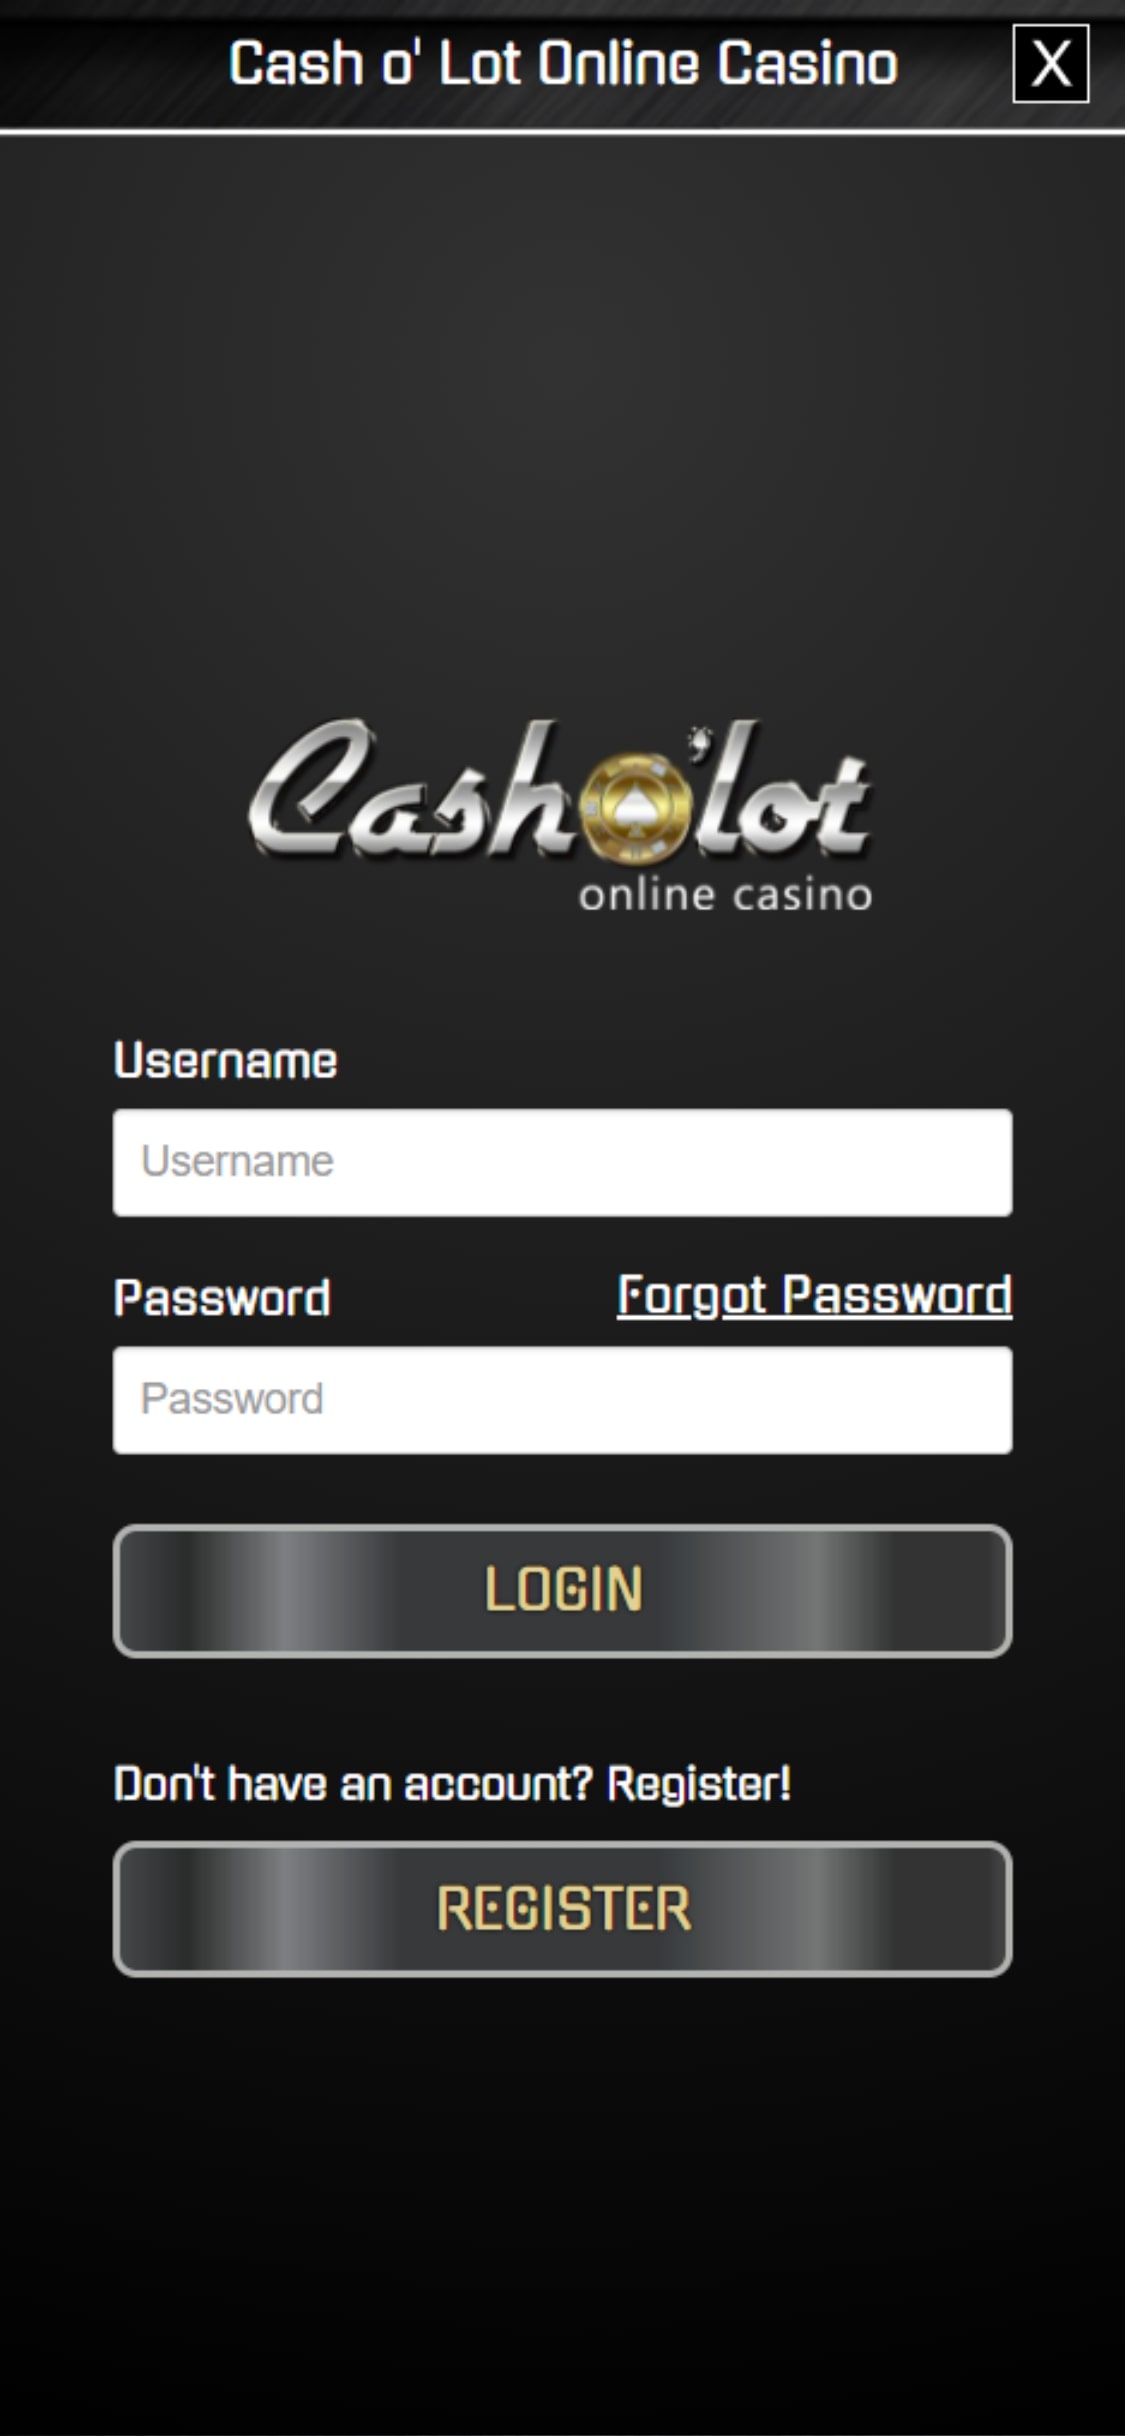 Cash o' Lot Casino Mobile Login Review